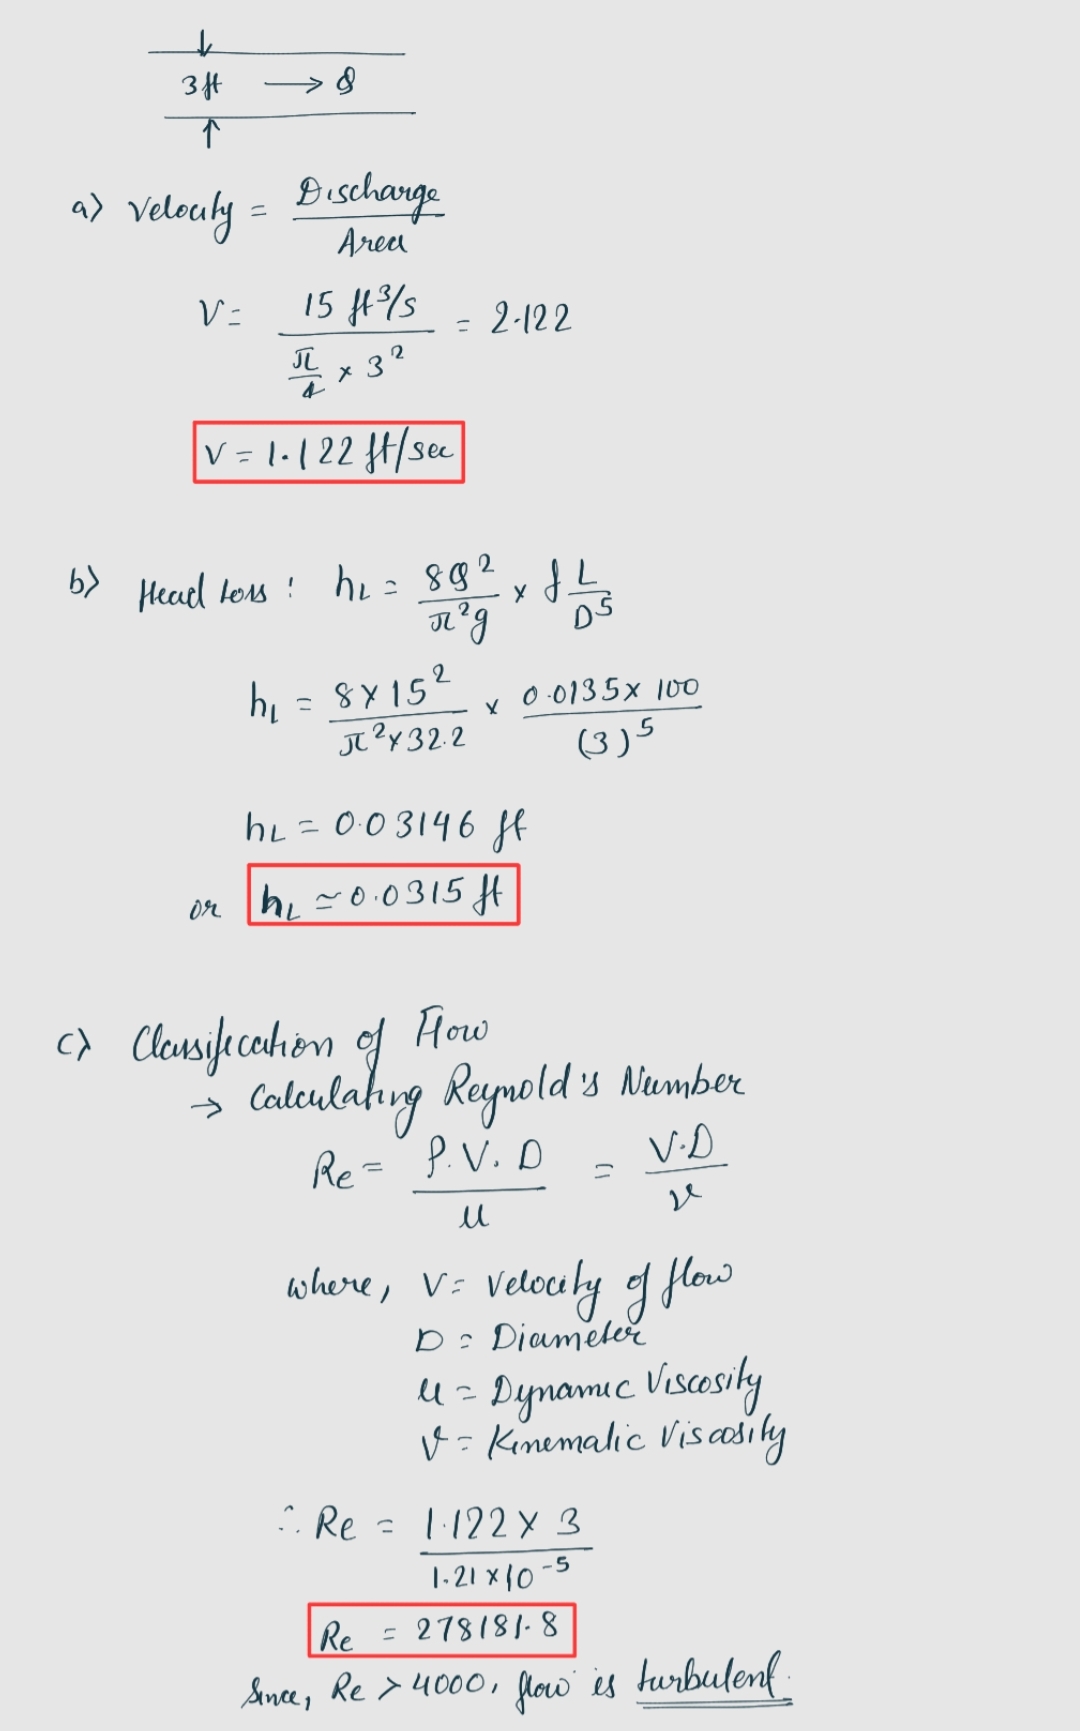 Bischange
a) velouly = Dischang
Area
V=
15 H%s
2-122
%3D
JL
* 3?
V = 1·(22 fH/sece
2
b) Head los ! hi= 88
hi =8¥152
J?y 32-2
0 0135x 100
(3)5
hL=003146 ff
or he~0.03(5 H
c) Clousfcahon of
Alow
Calculafirg Reynold 's Number
Re='P. V.D
'y Number
ViD
where, V: Velocily gflaw
b: Diameler
4= Dynamic Viscesily
V= Kinemalic Viscosily
C Re = 1122 Y 3
1-21 x{0
- 278181-8
-5
Re
Smce, Re > 4000, flow is hurbulen{
